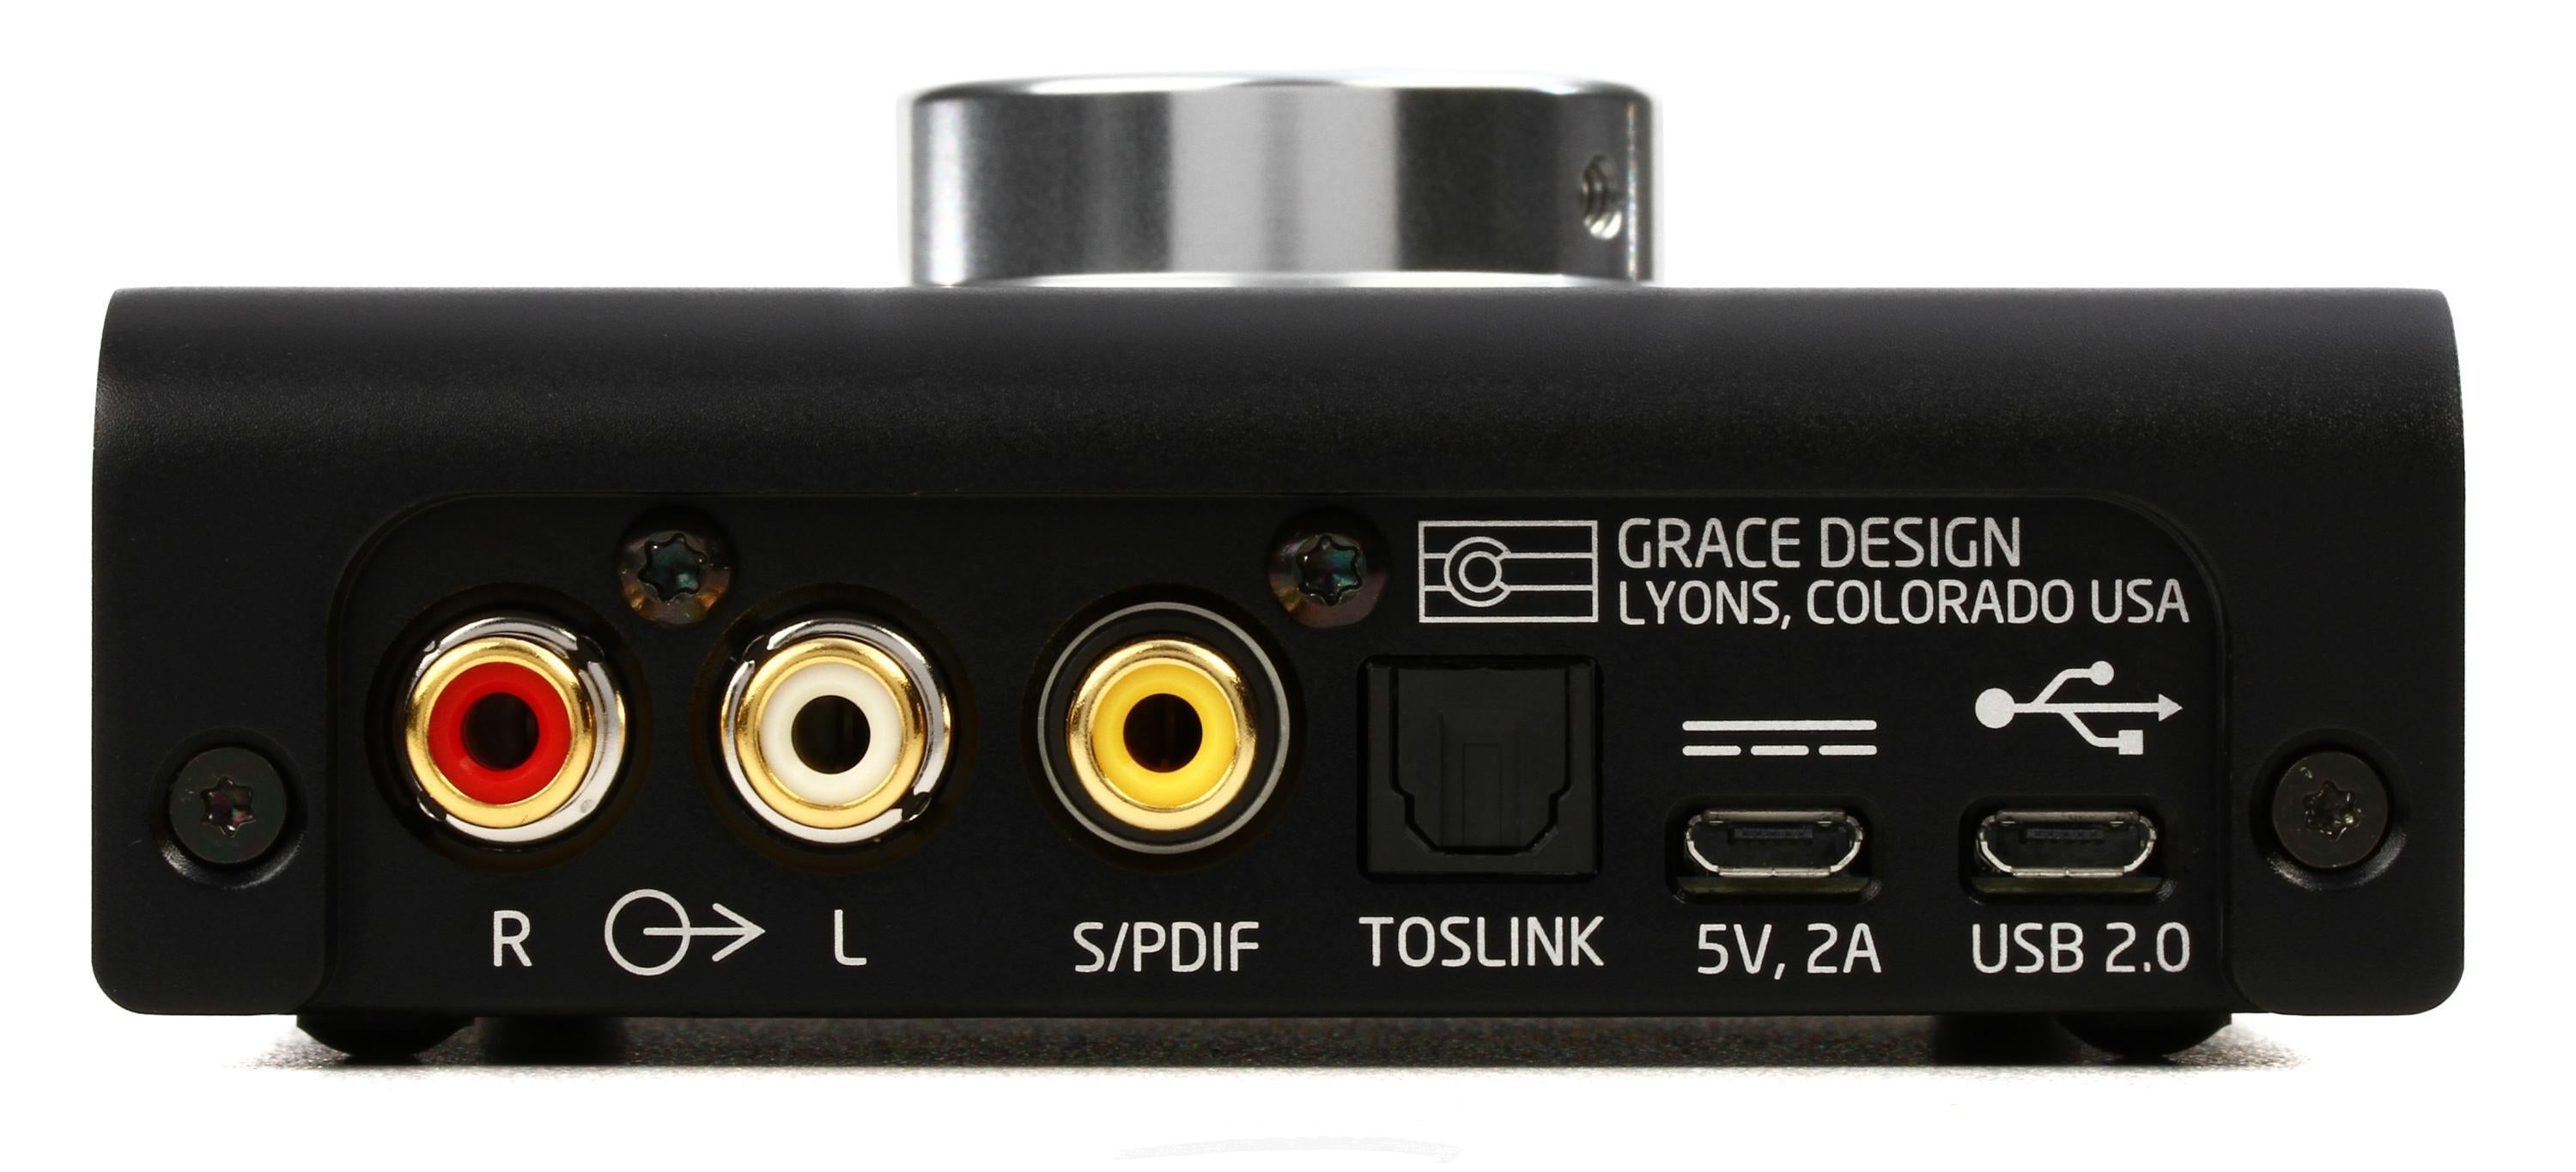 Grace Design m900 - Desktop DAC Headphone Amplifier | Sweetwater